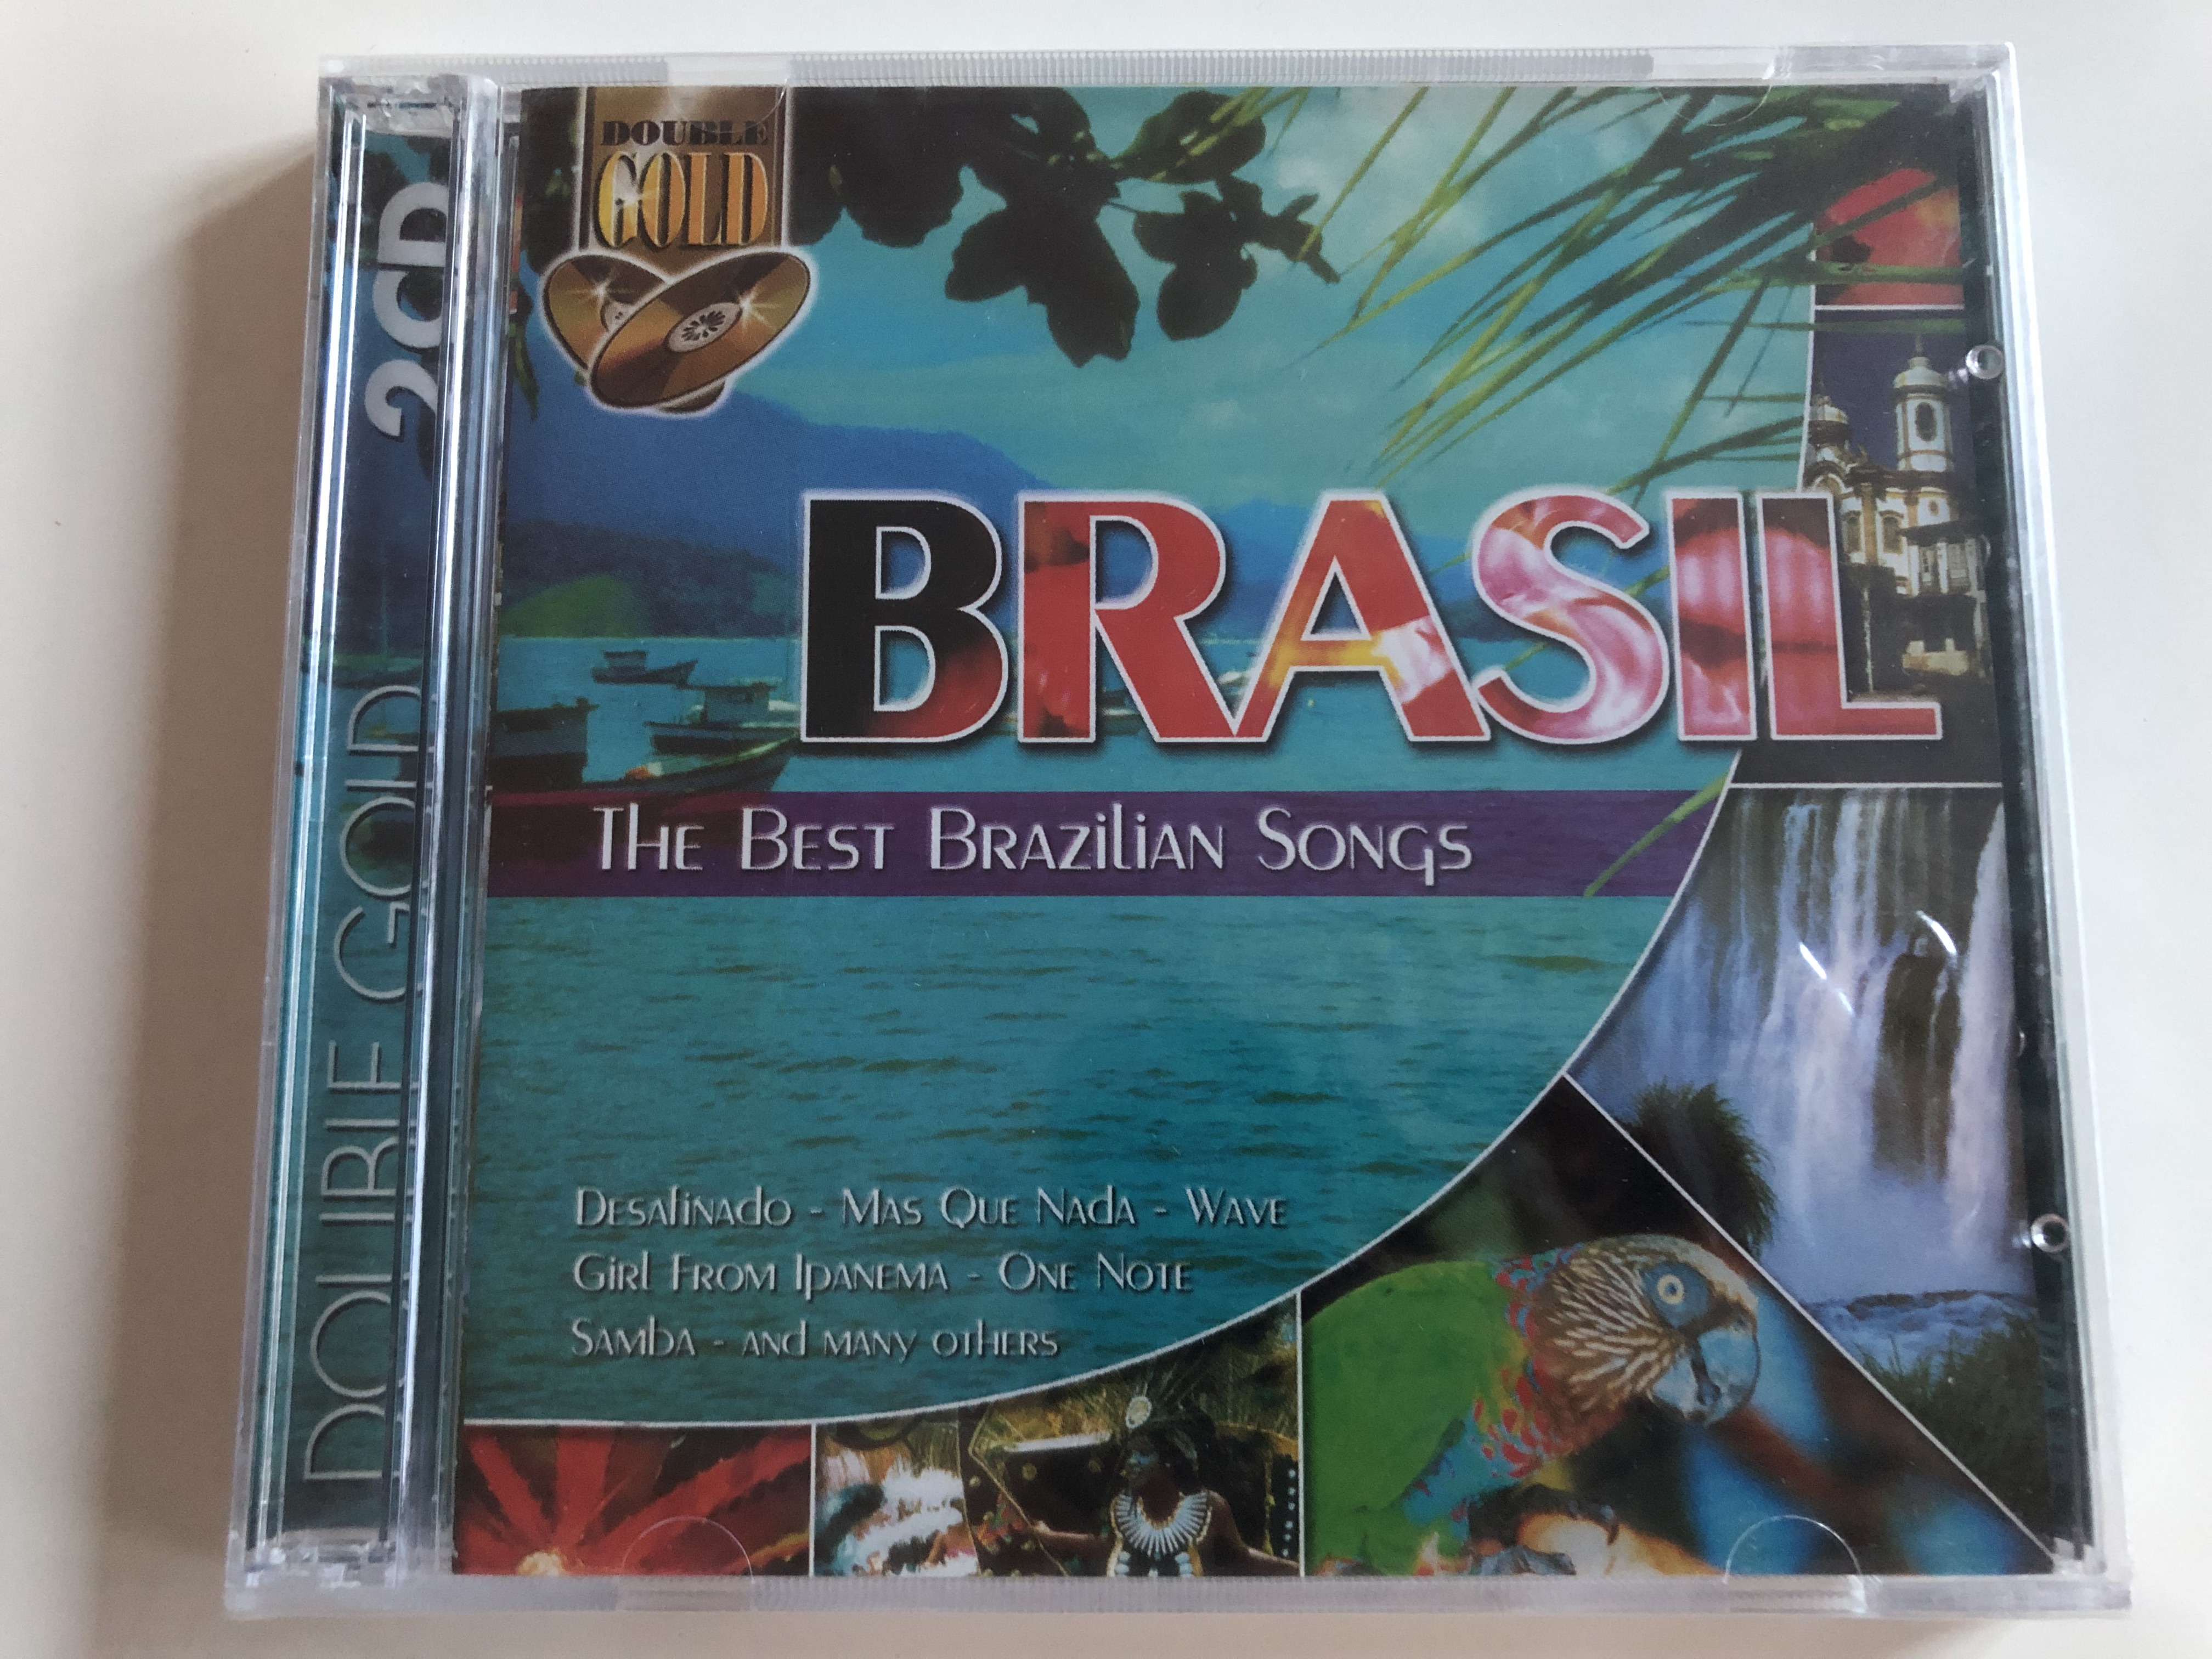 brasil-the-best-brazilian-songs-desalinado-mas-que-nada-wave-girl-from-ipanema-one-note-double-gold-2cd-audio-cd-1701942-1-.jpg